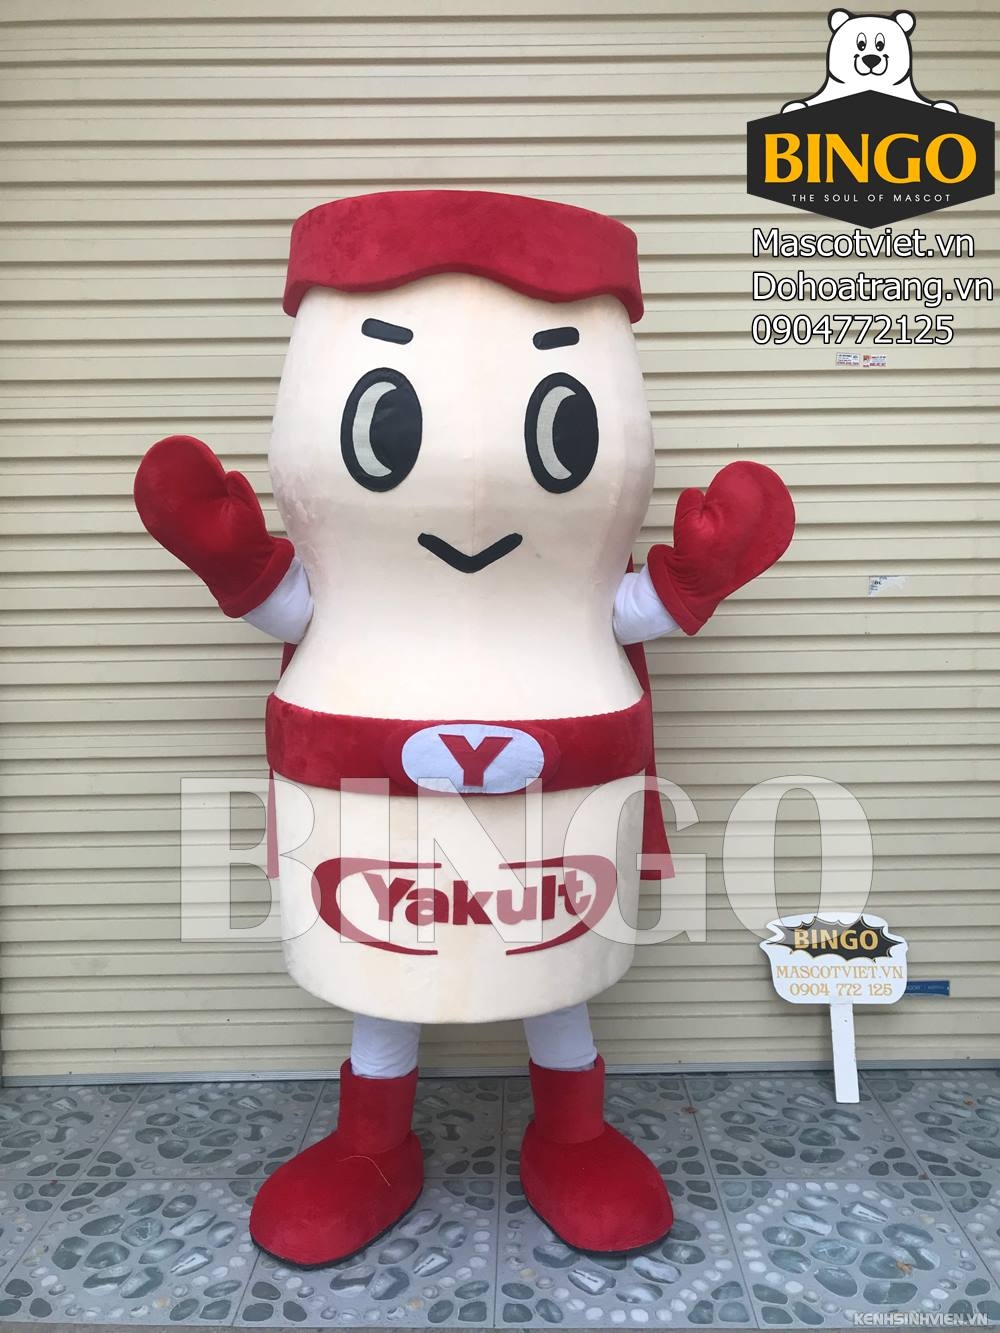 mascot-hop-sua-yakult-bingo-costumes-0904772125.jpg